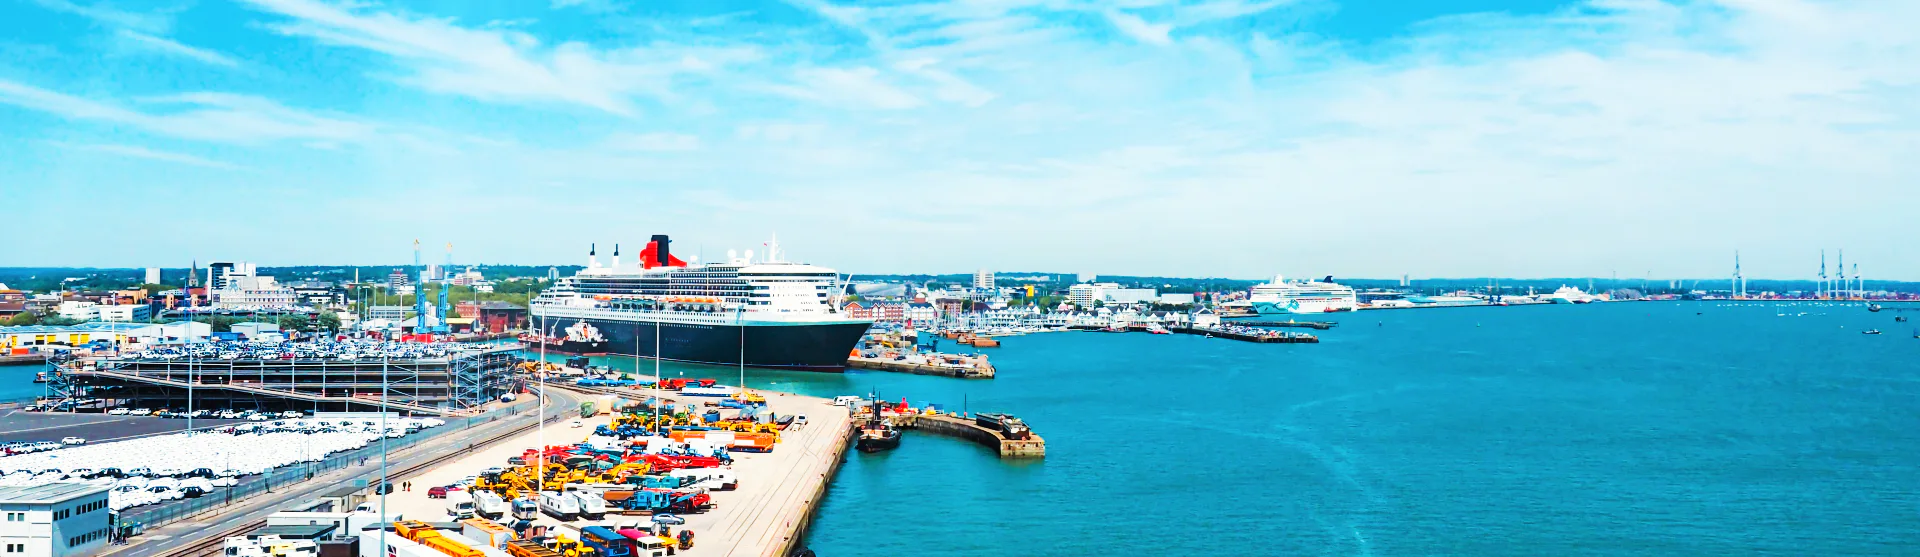 Cruisevakantie Southampton